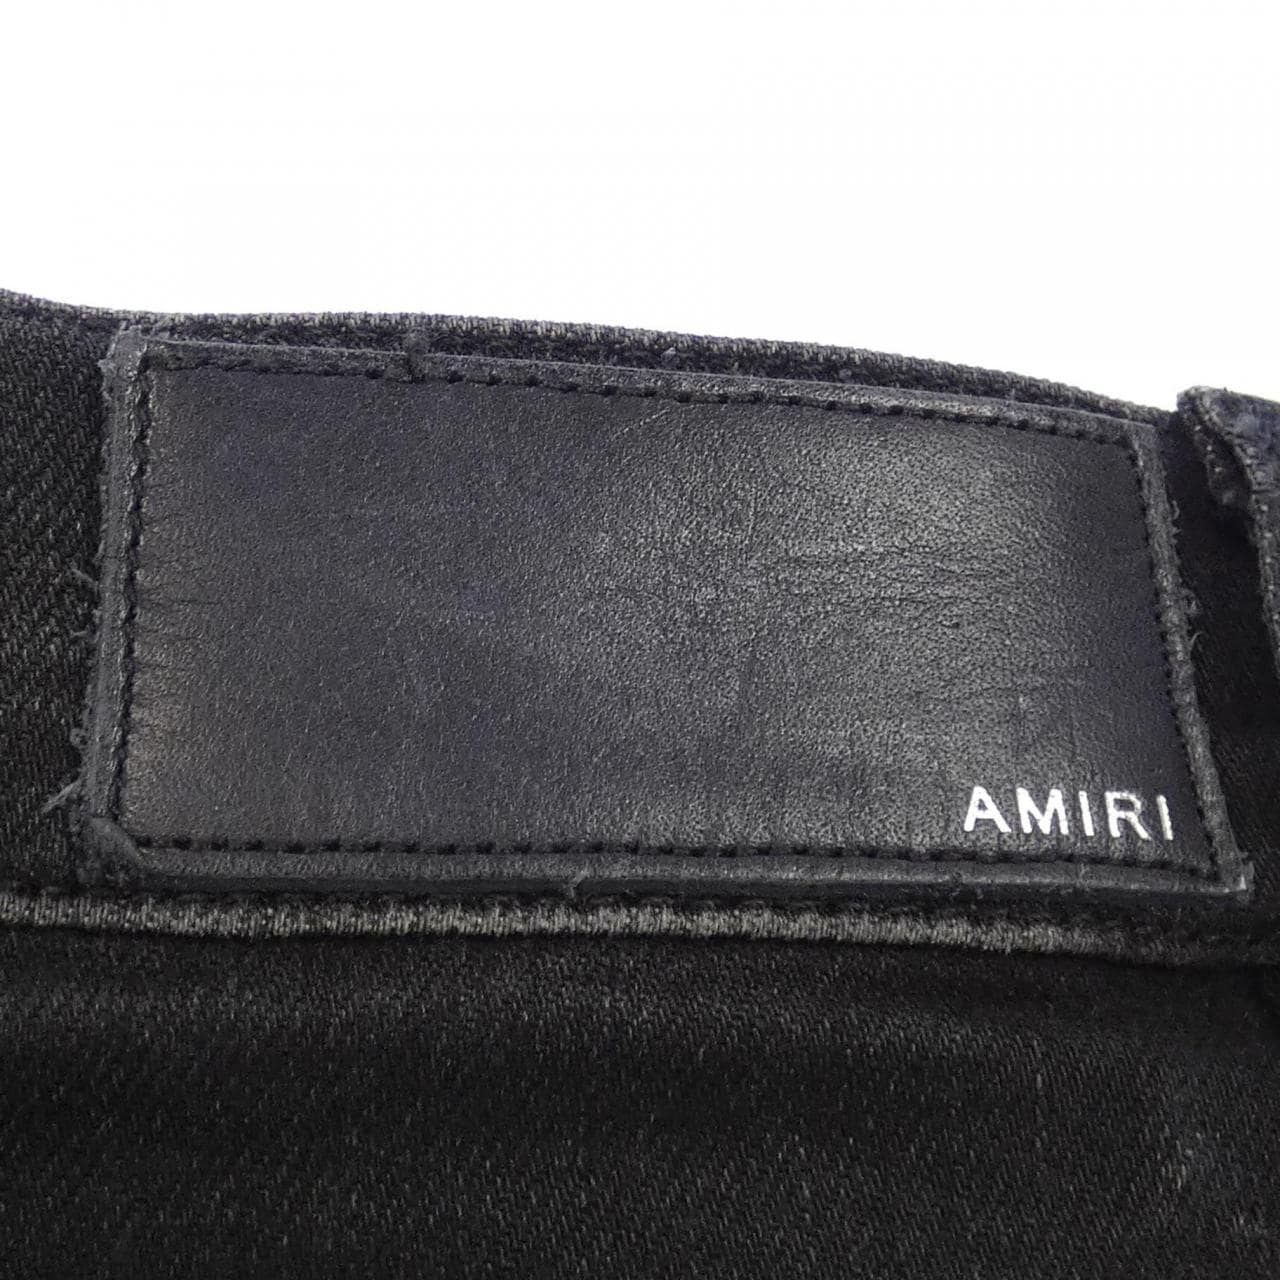 AMIRI jeans